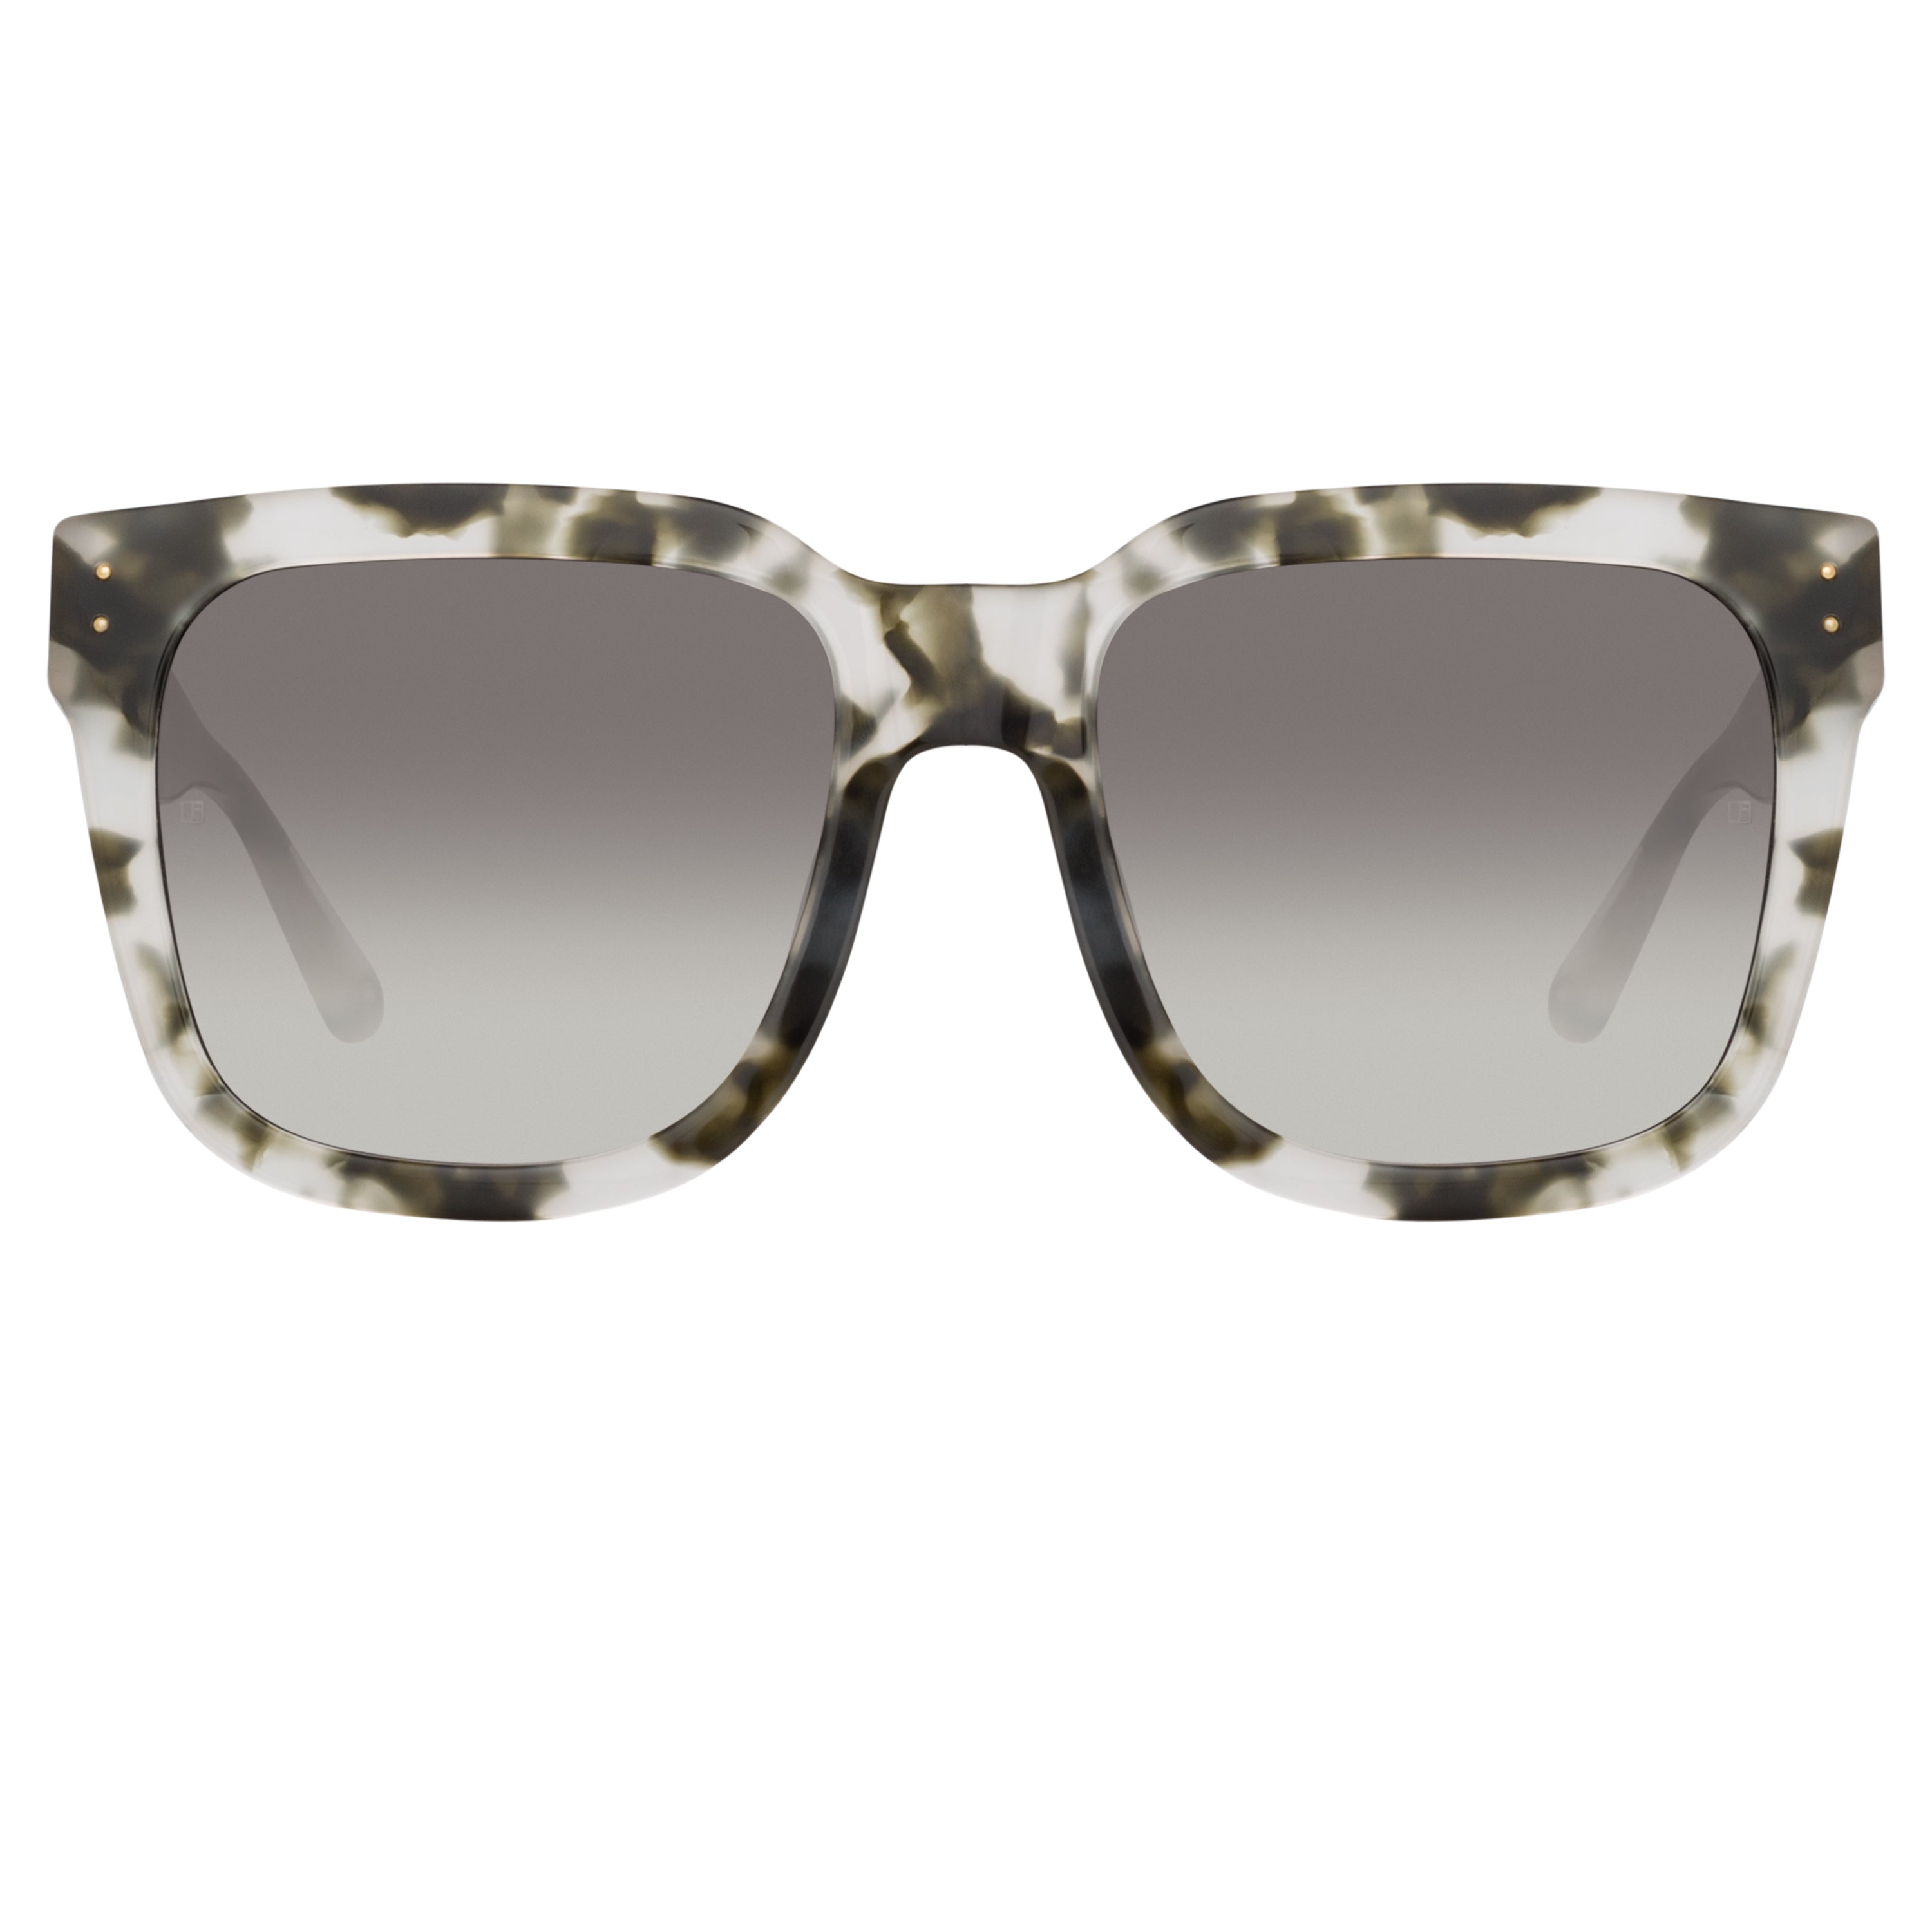 Freya D-Frame Sunglasses in Black and Grey Tortoiseshell